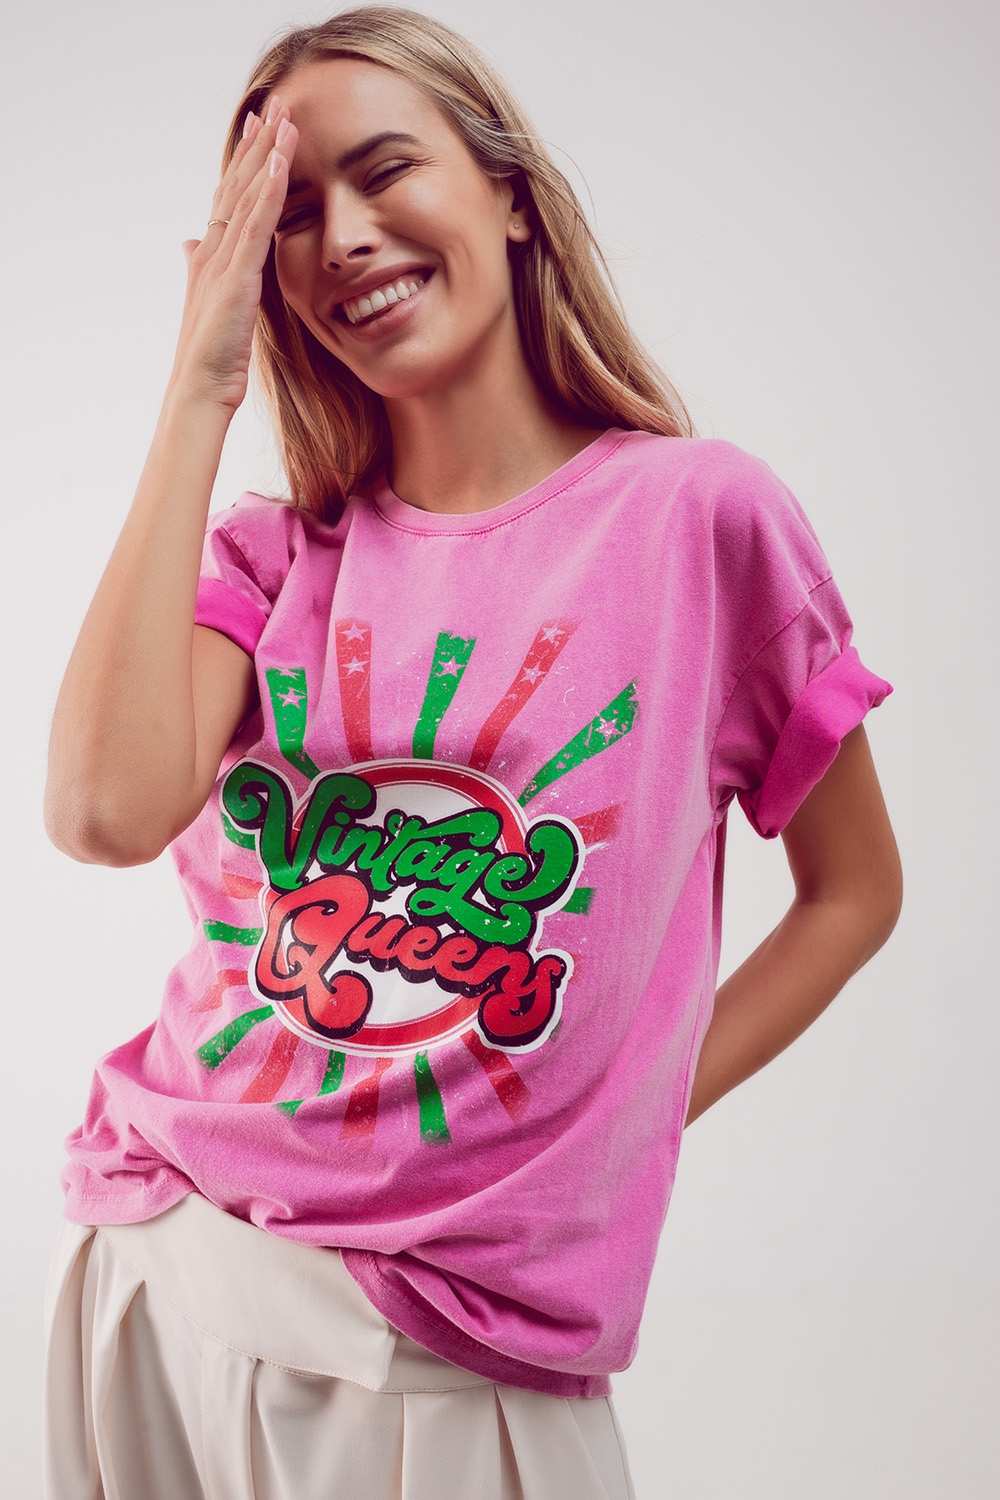 WOMEN FASHION Shirts & T-shirts Asymmetric Pink S NoName T-shirt discount 98% 